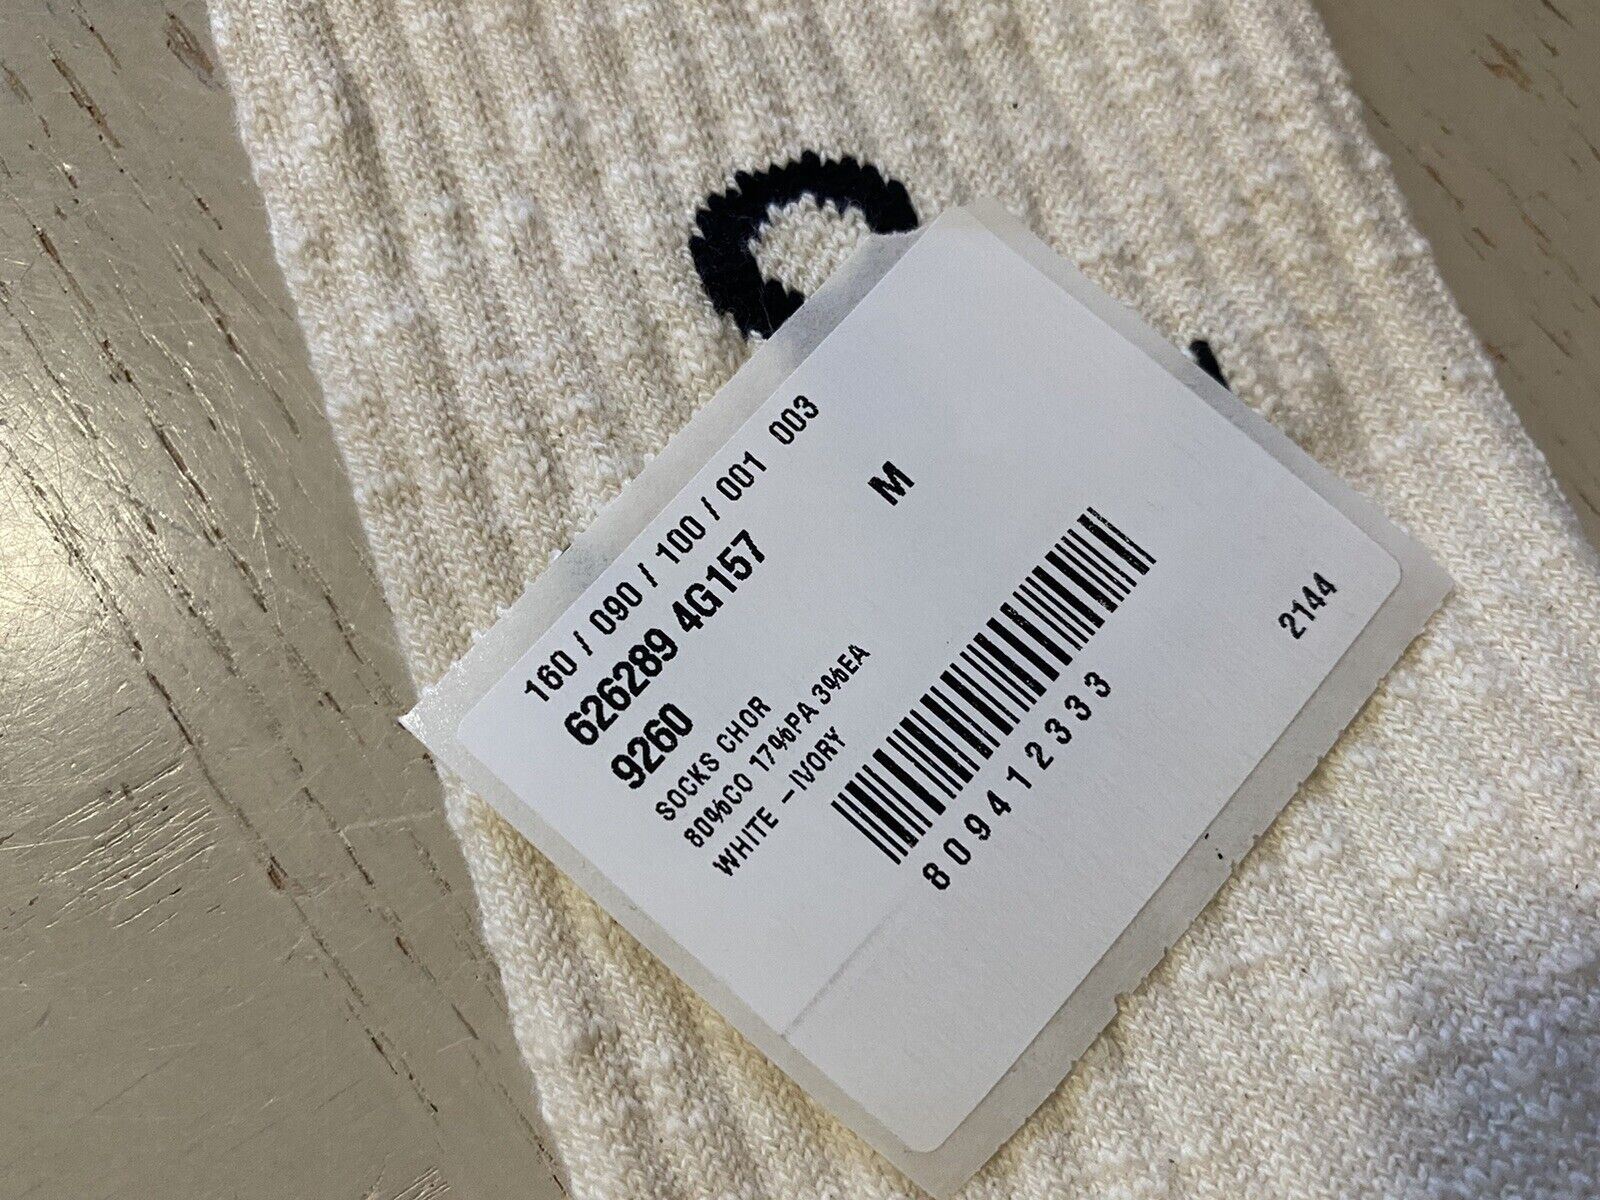 NWT Gucci Men’s Cotton Socks With GG Monogram White/Milk Size M Italy